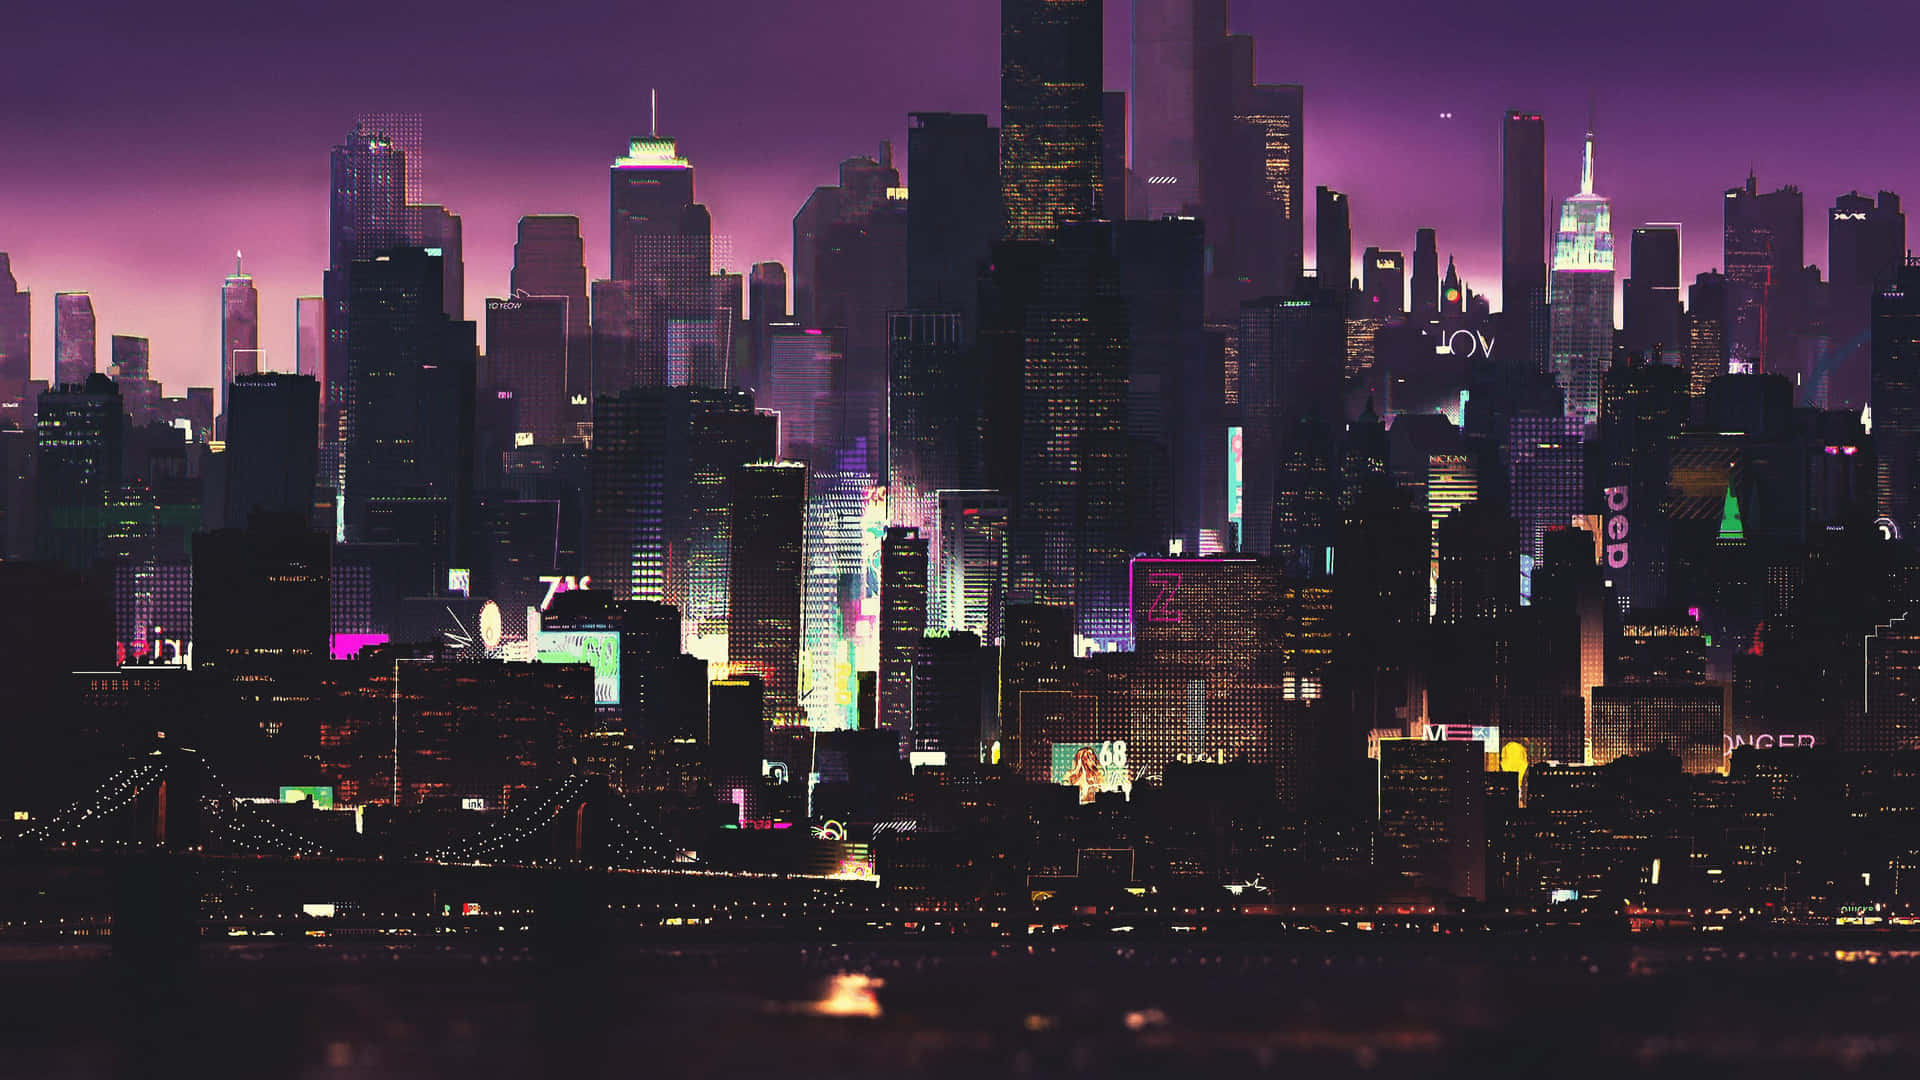 Dystopian Metropolis - The Stunning View of Dark City in 4K Wallpaper